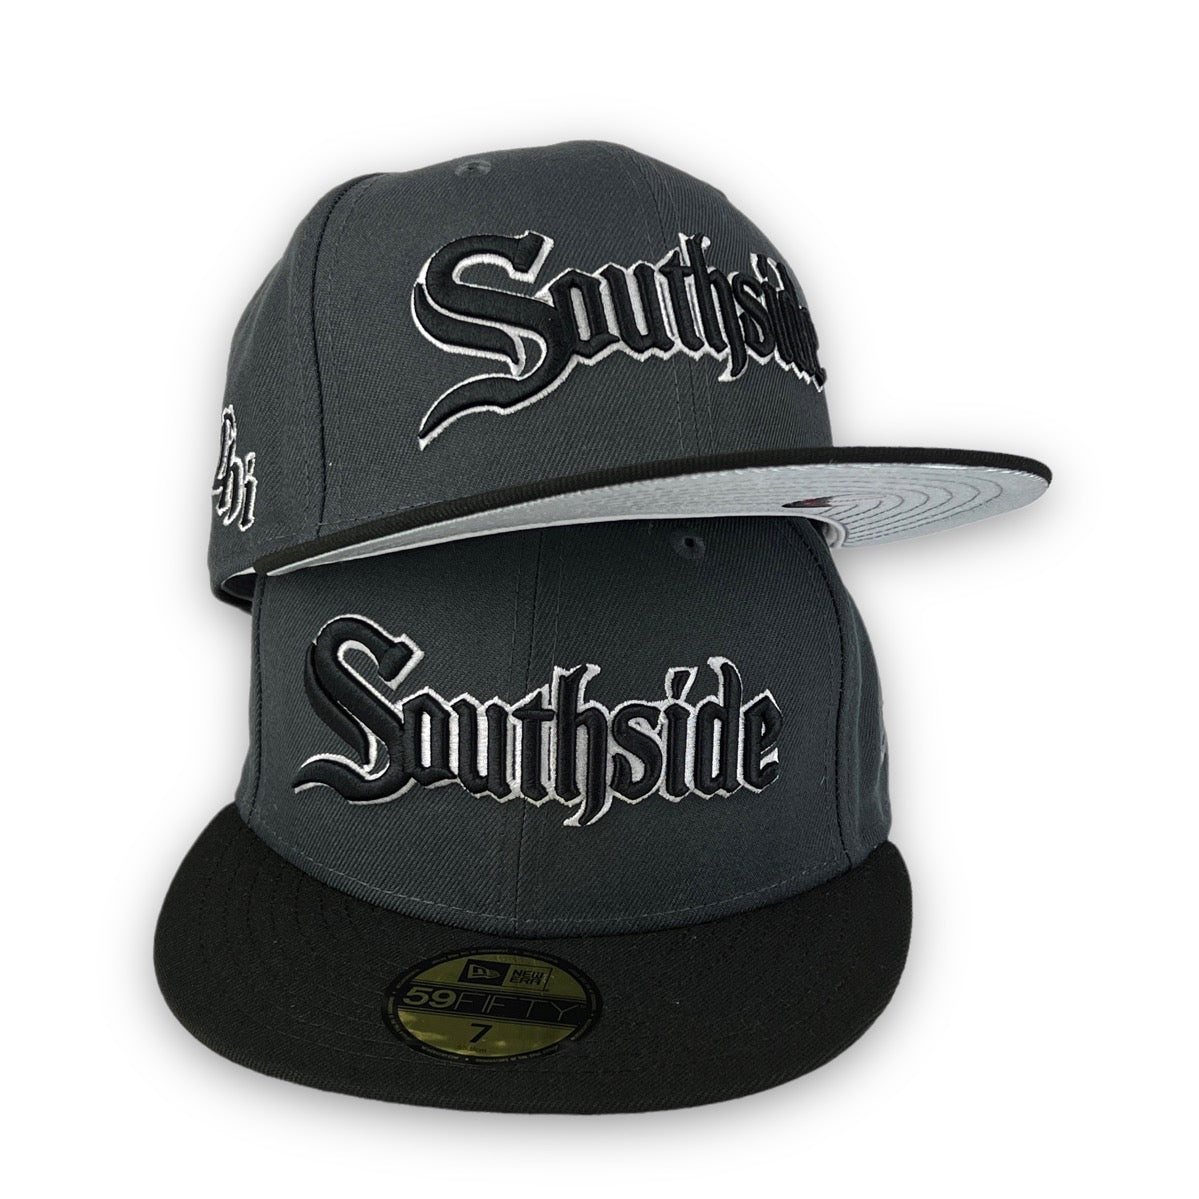 white sox southside hat